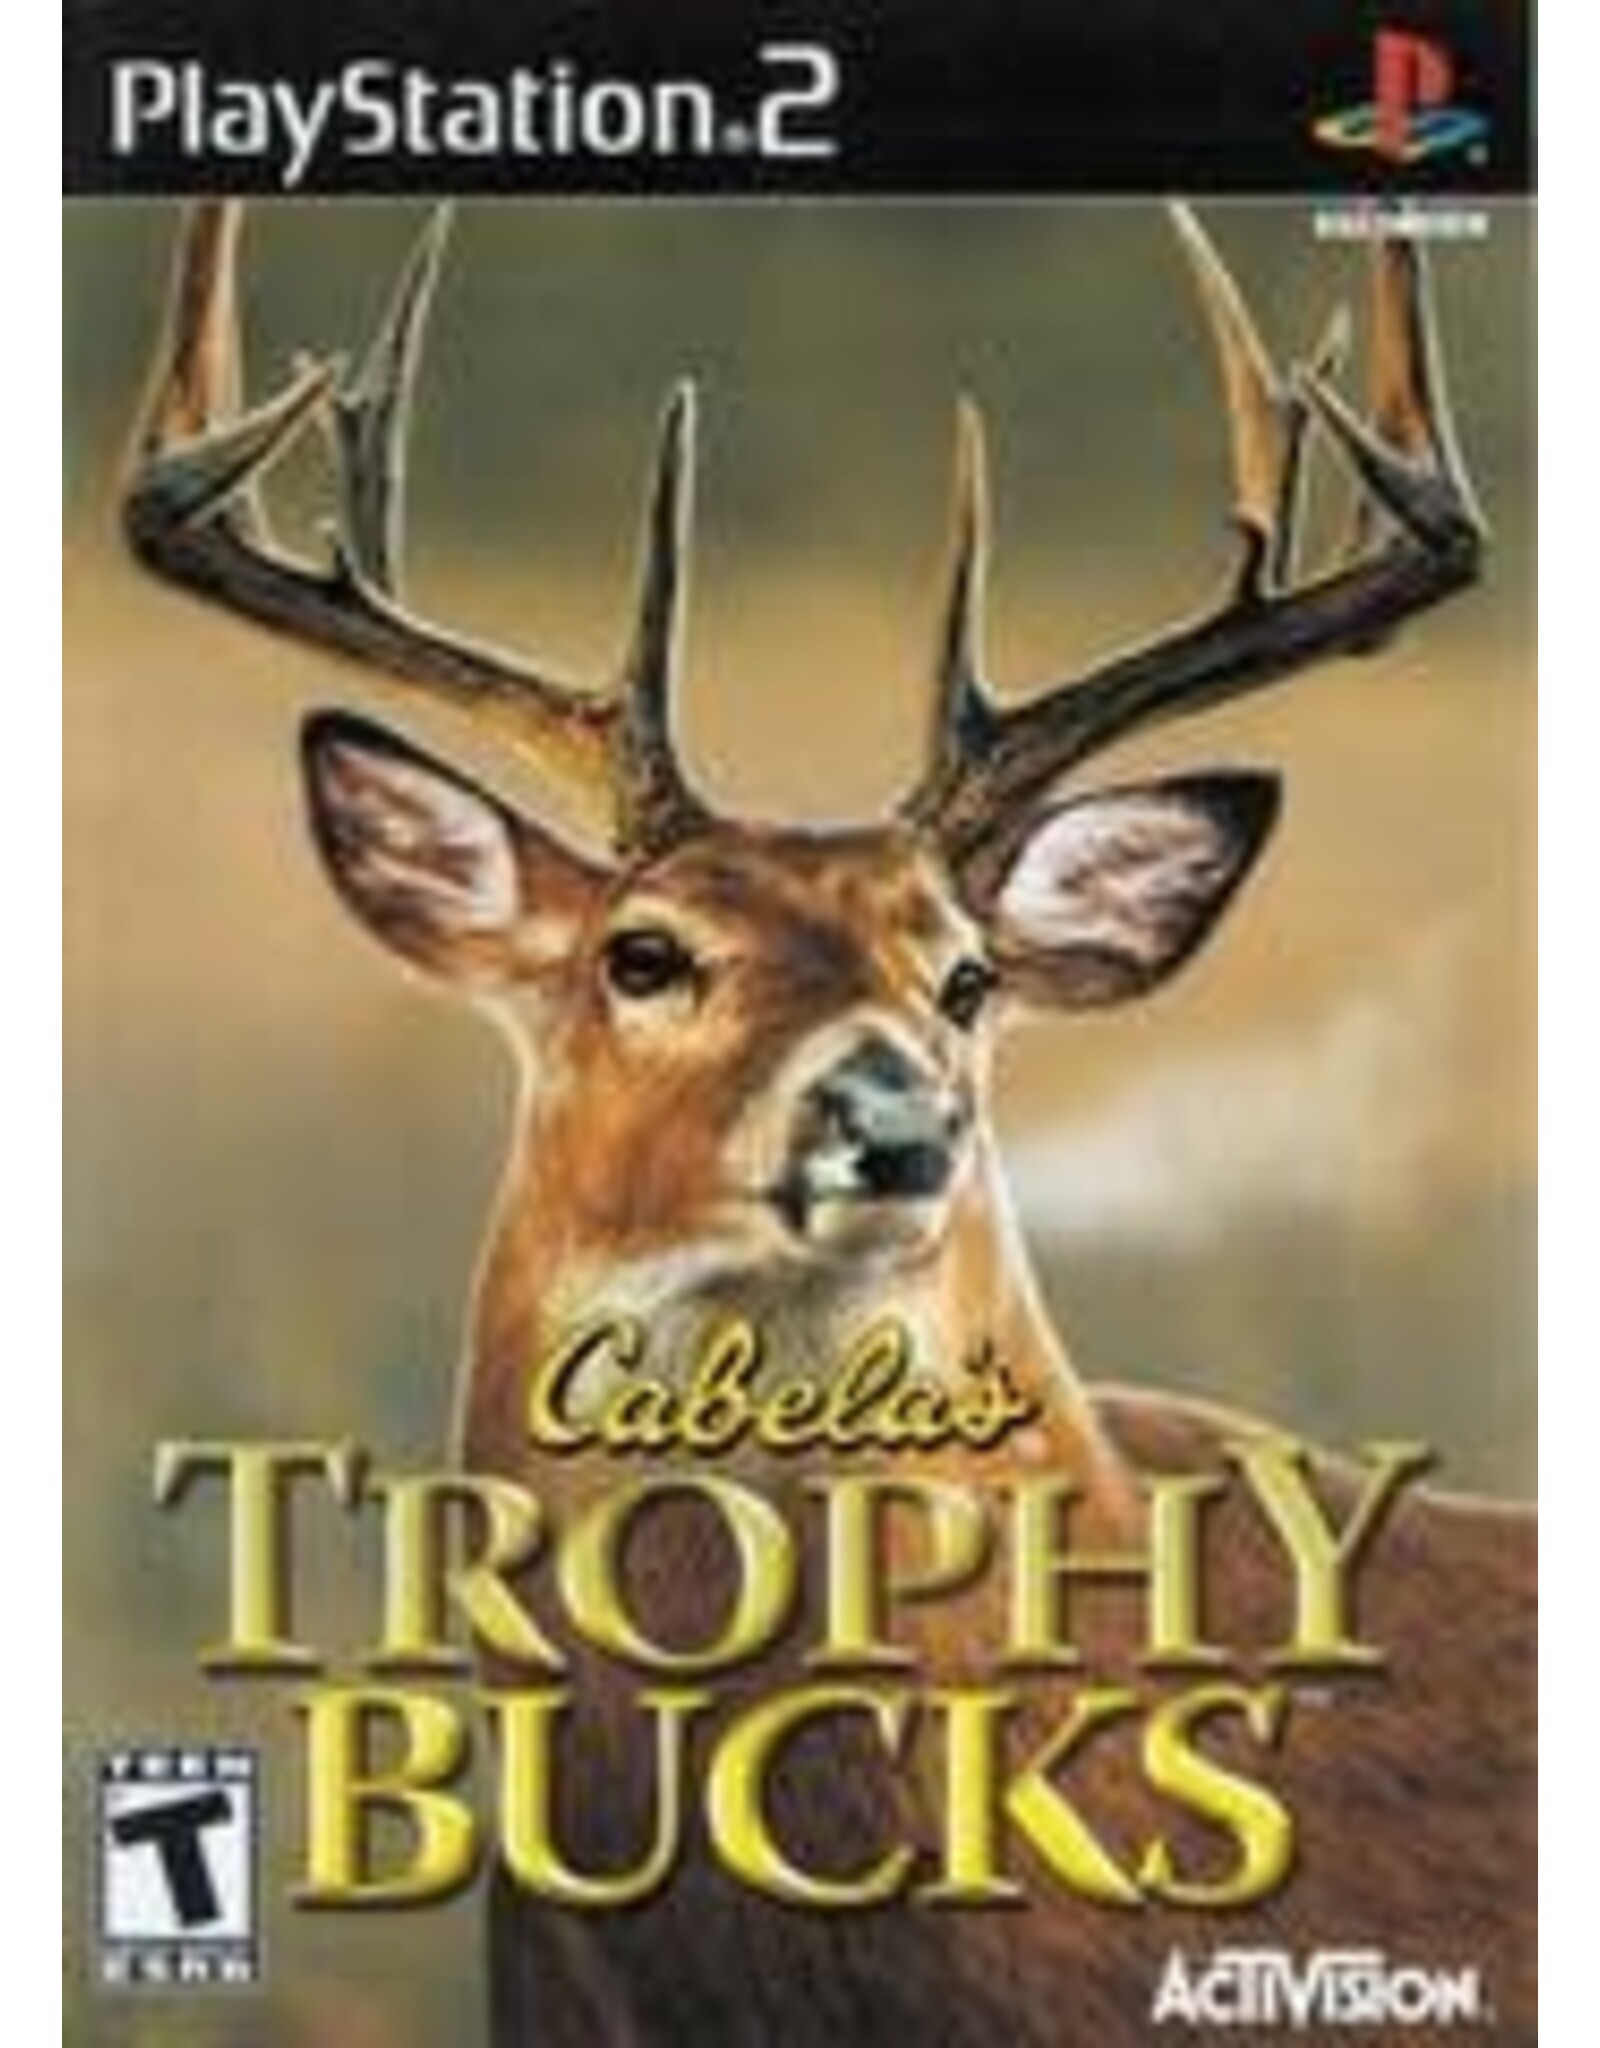 Playstation 2 Cabela's Trophy Bucks (No Manual)